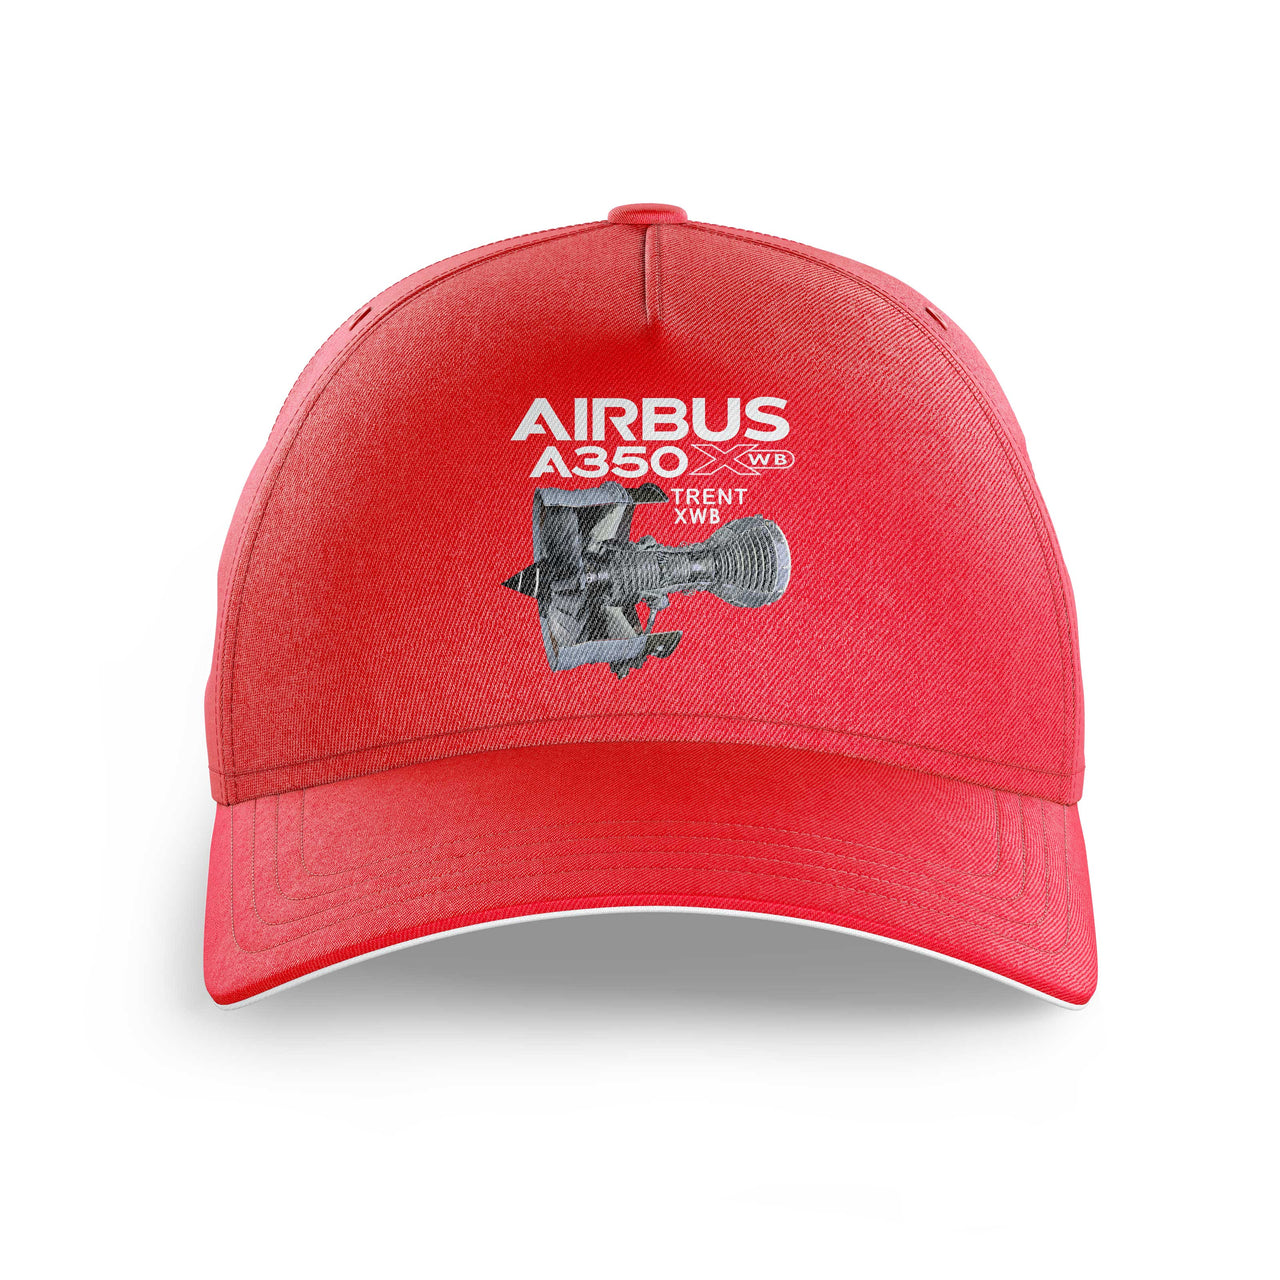 Airbus A350 & Trent XWB Engine Printed Hats